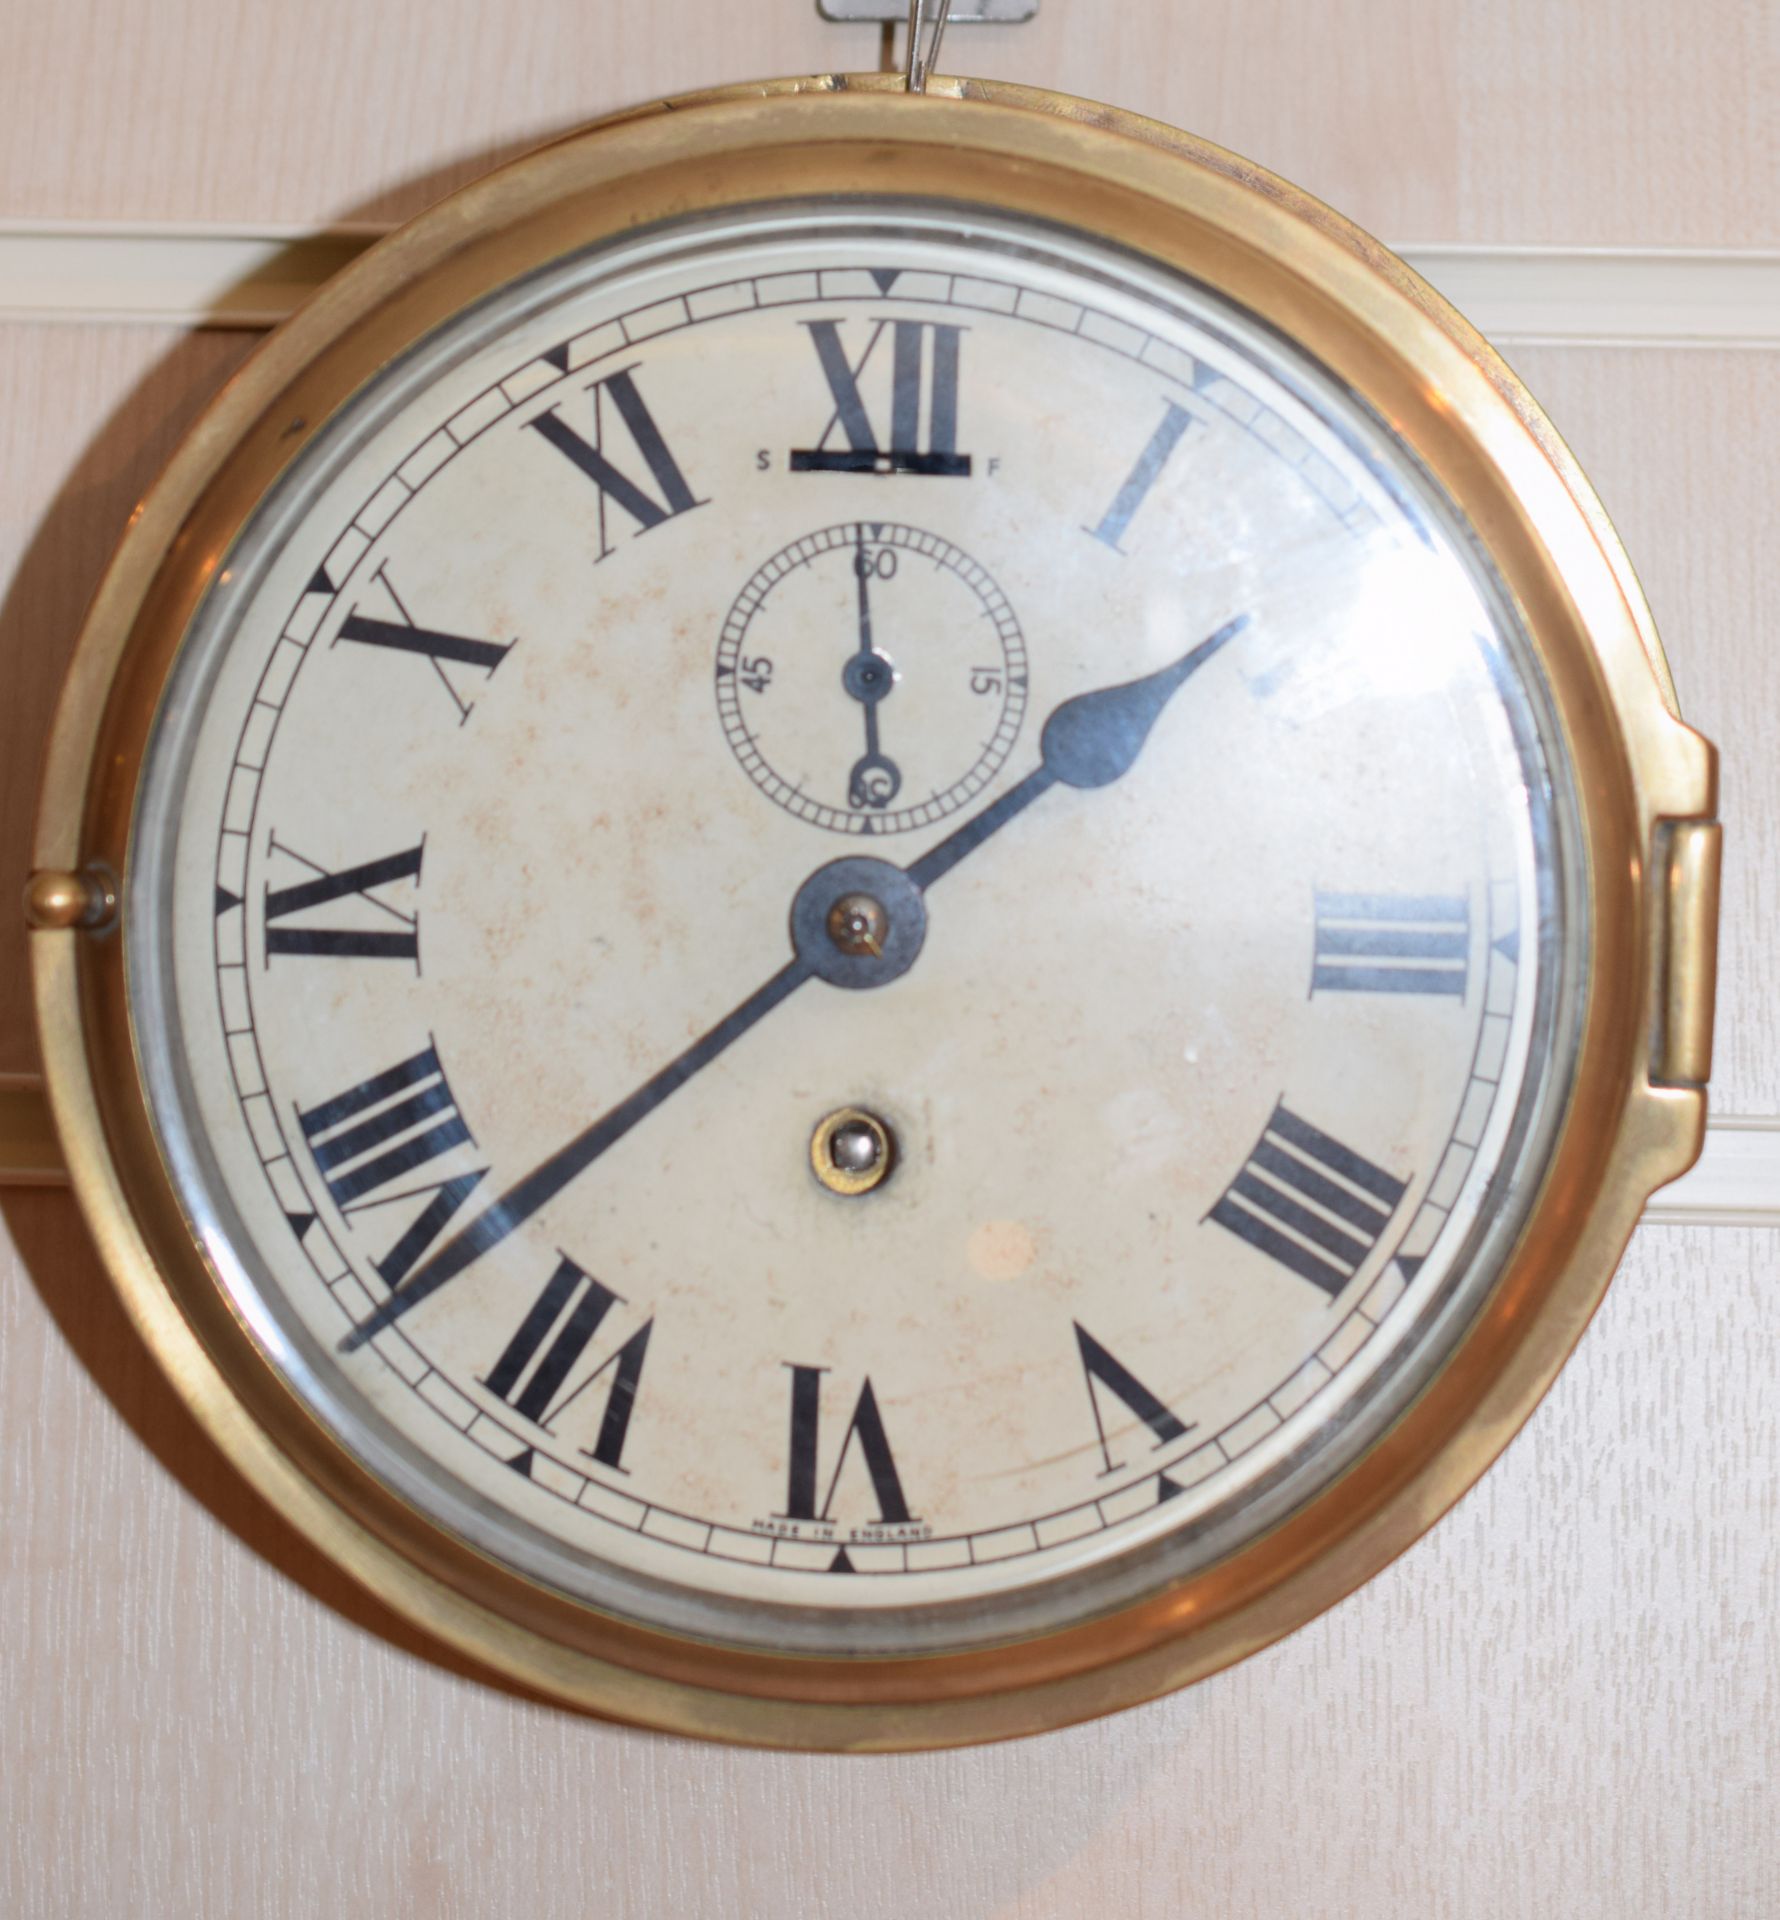 Original Brass Ship's Bulkhead Clock